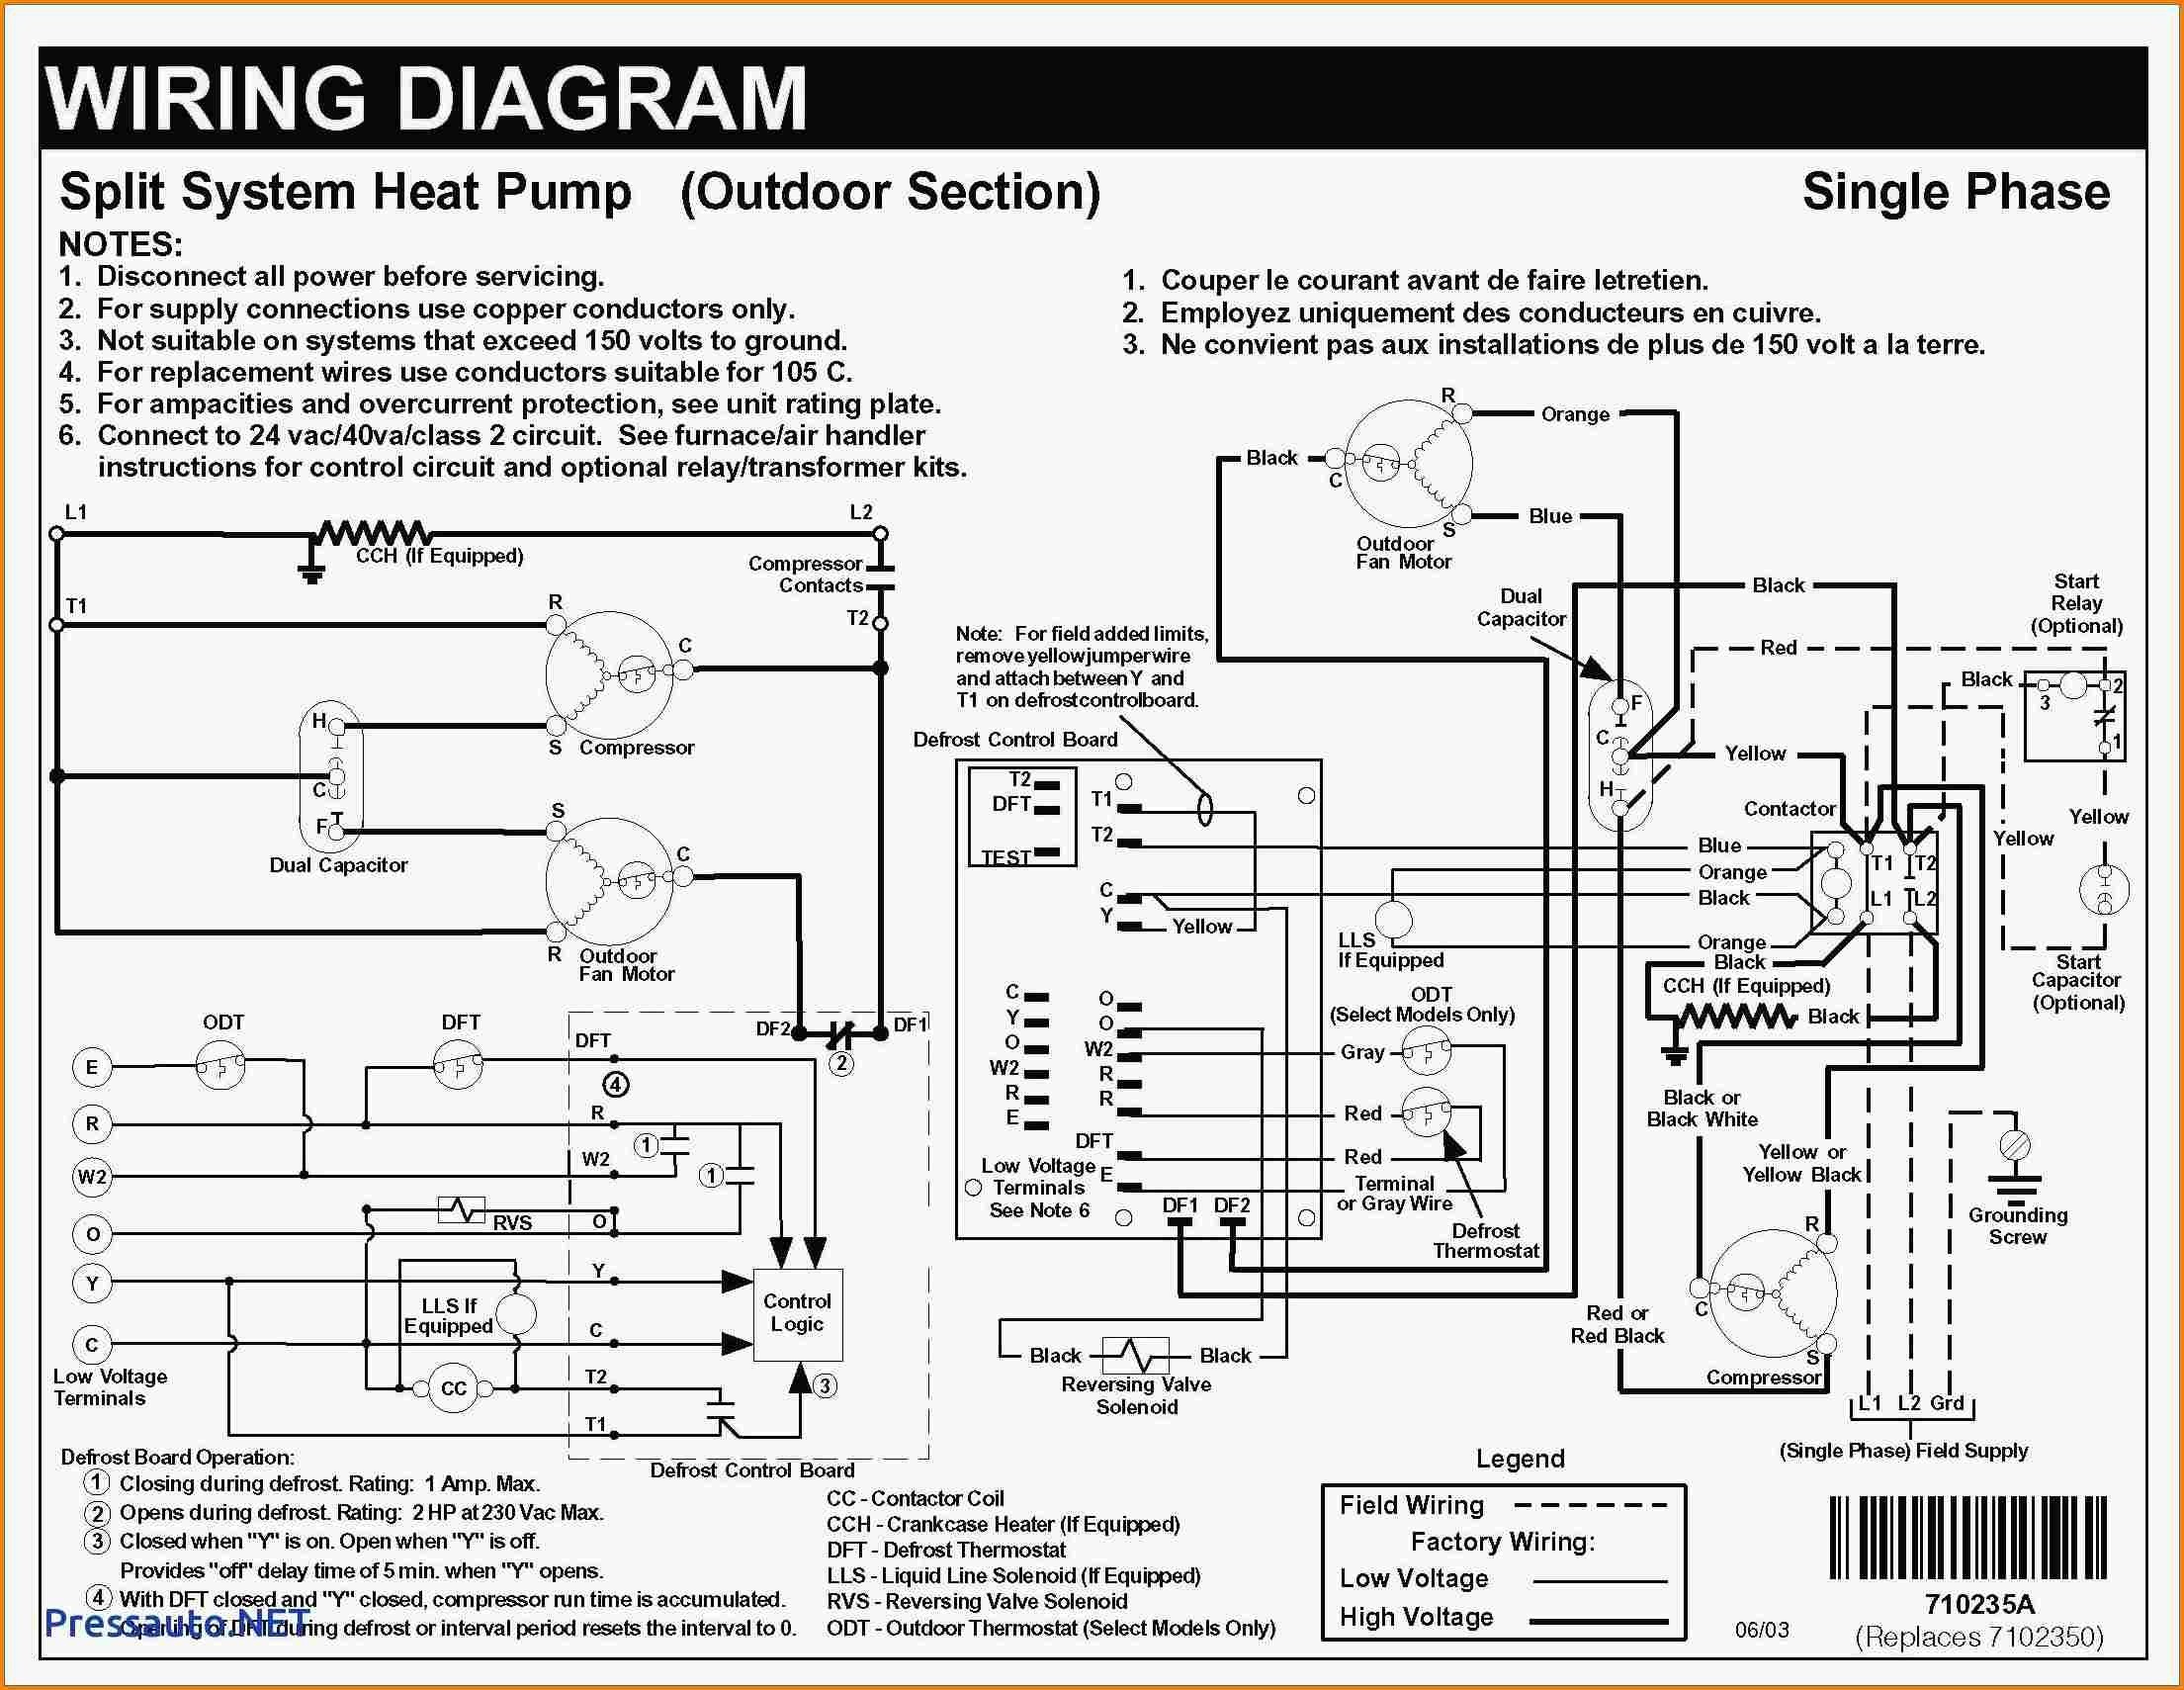 Wiring Diagram for Baseboard Heater Best Electric Heat Furnace Wiring Diagram Fresh Goodman Electric Furnace